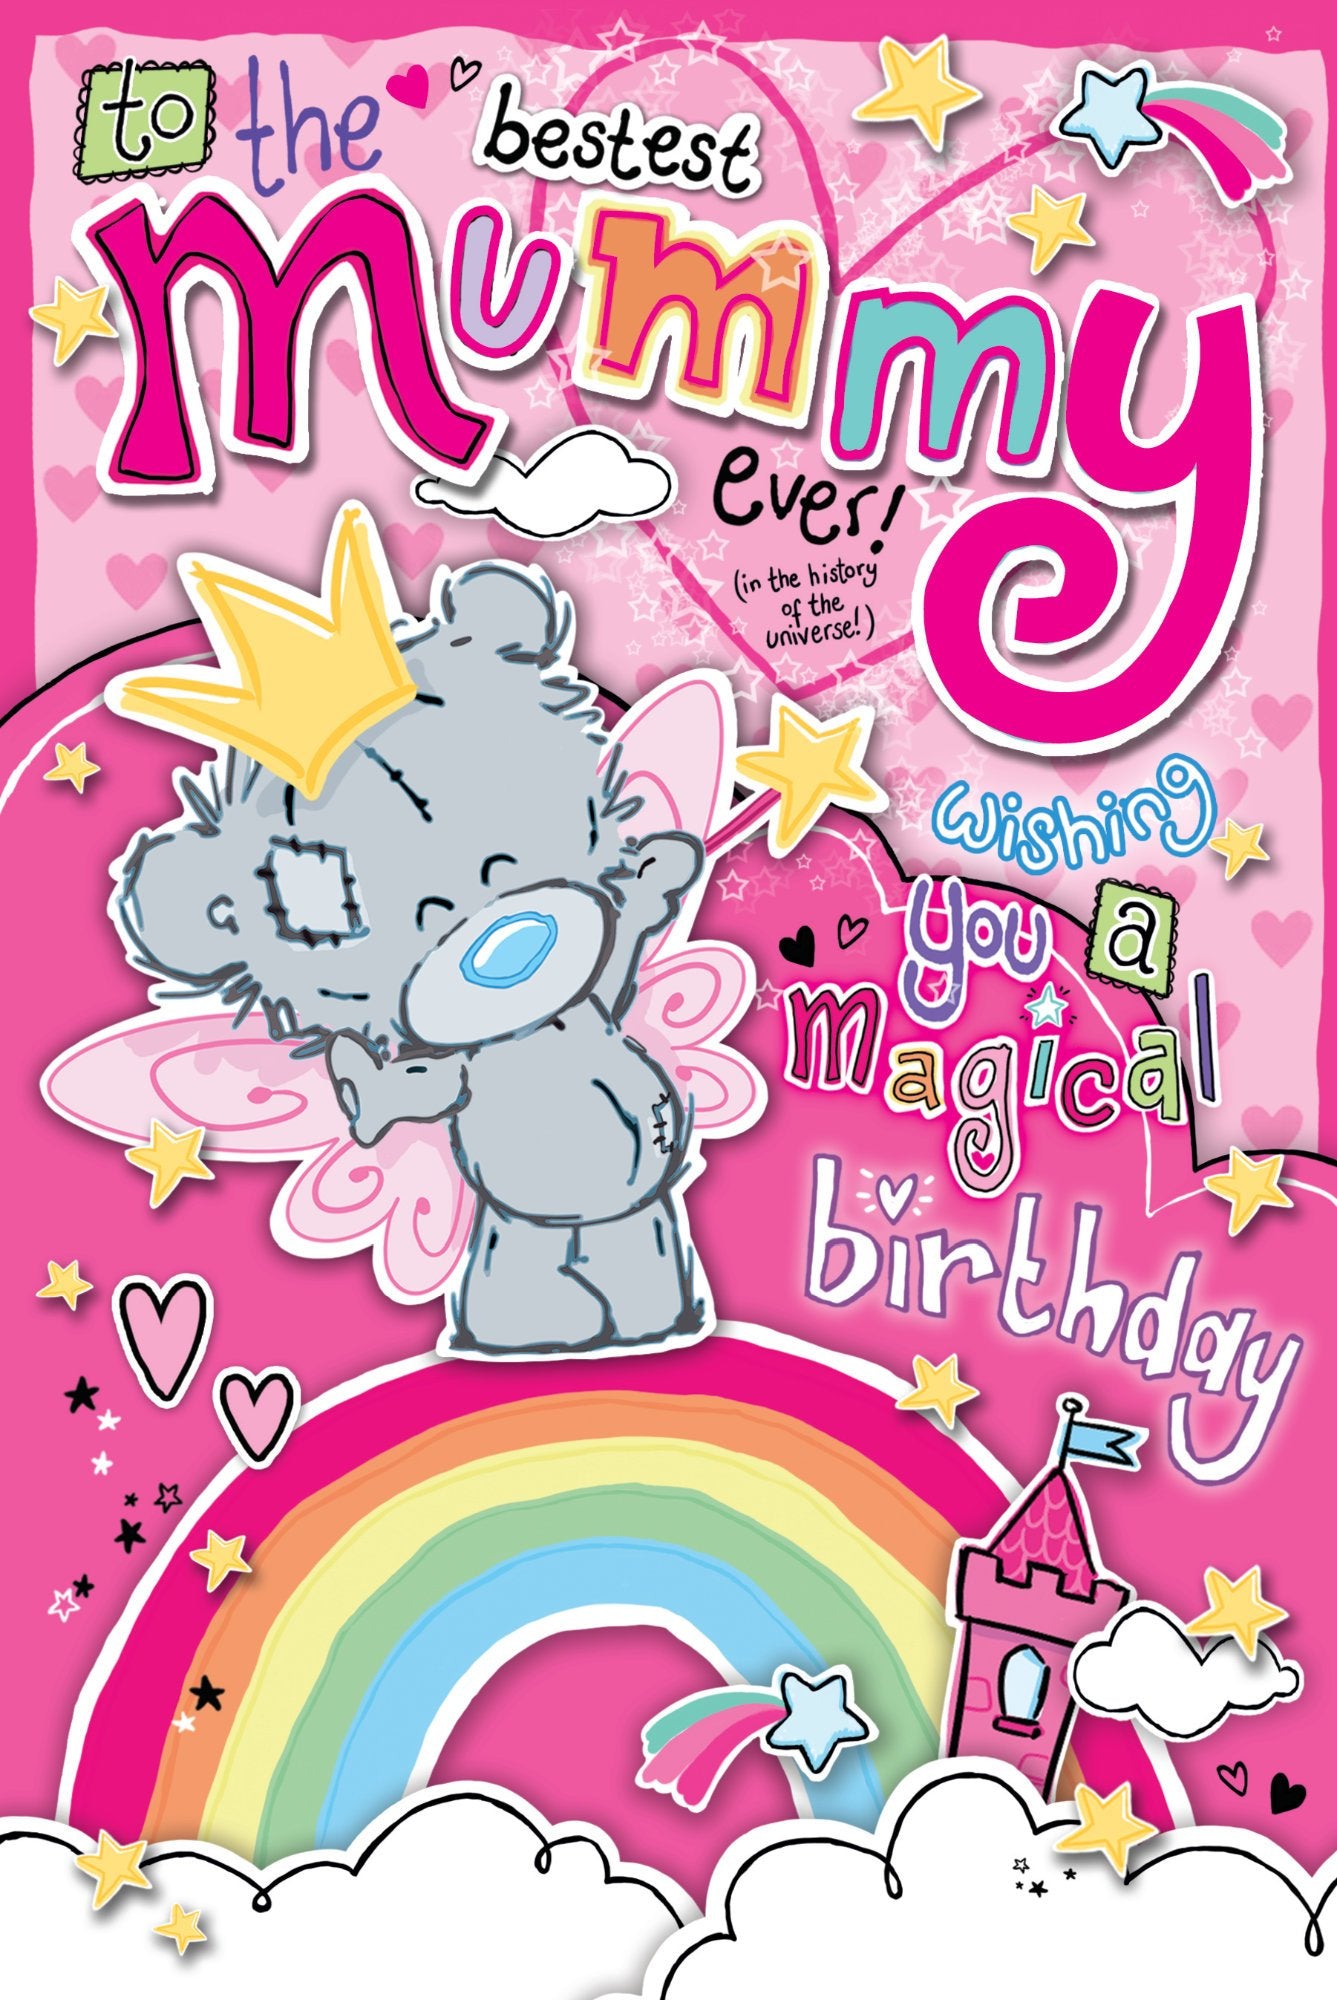 Photograph of Mummy Birthday Teddy Rainbow Greetings Card at Nicole's Shop